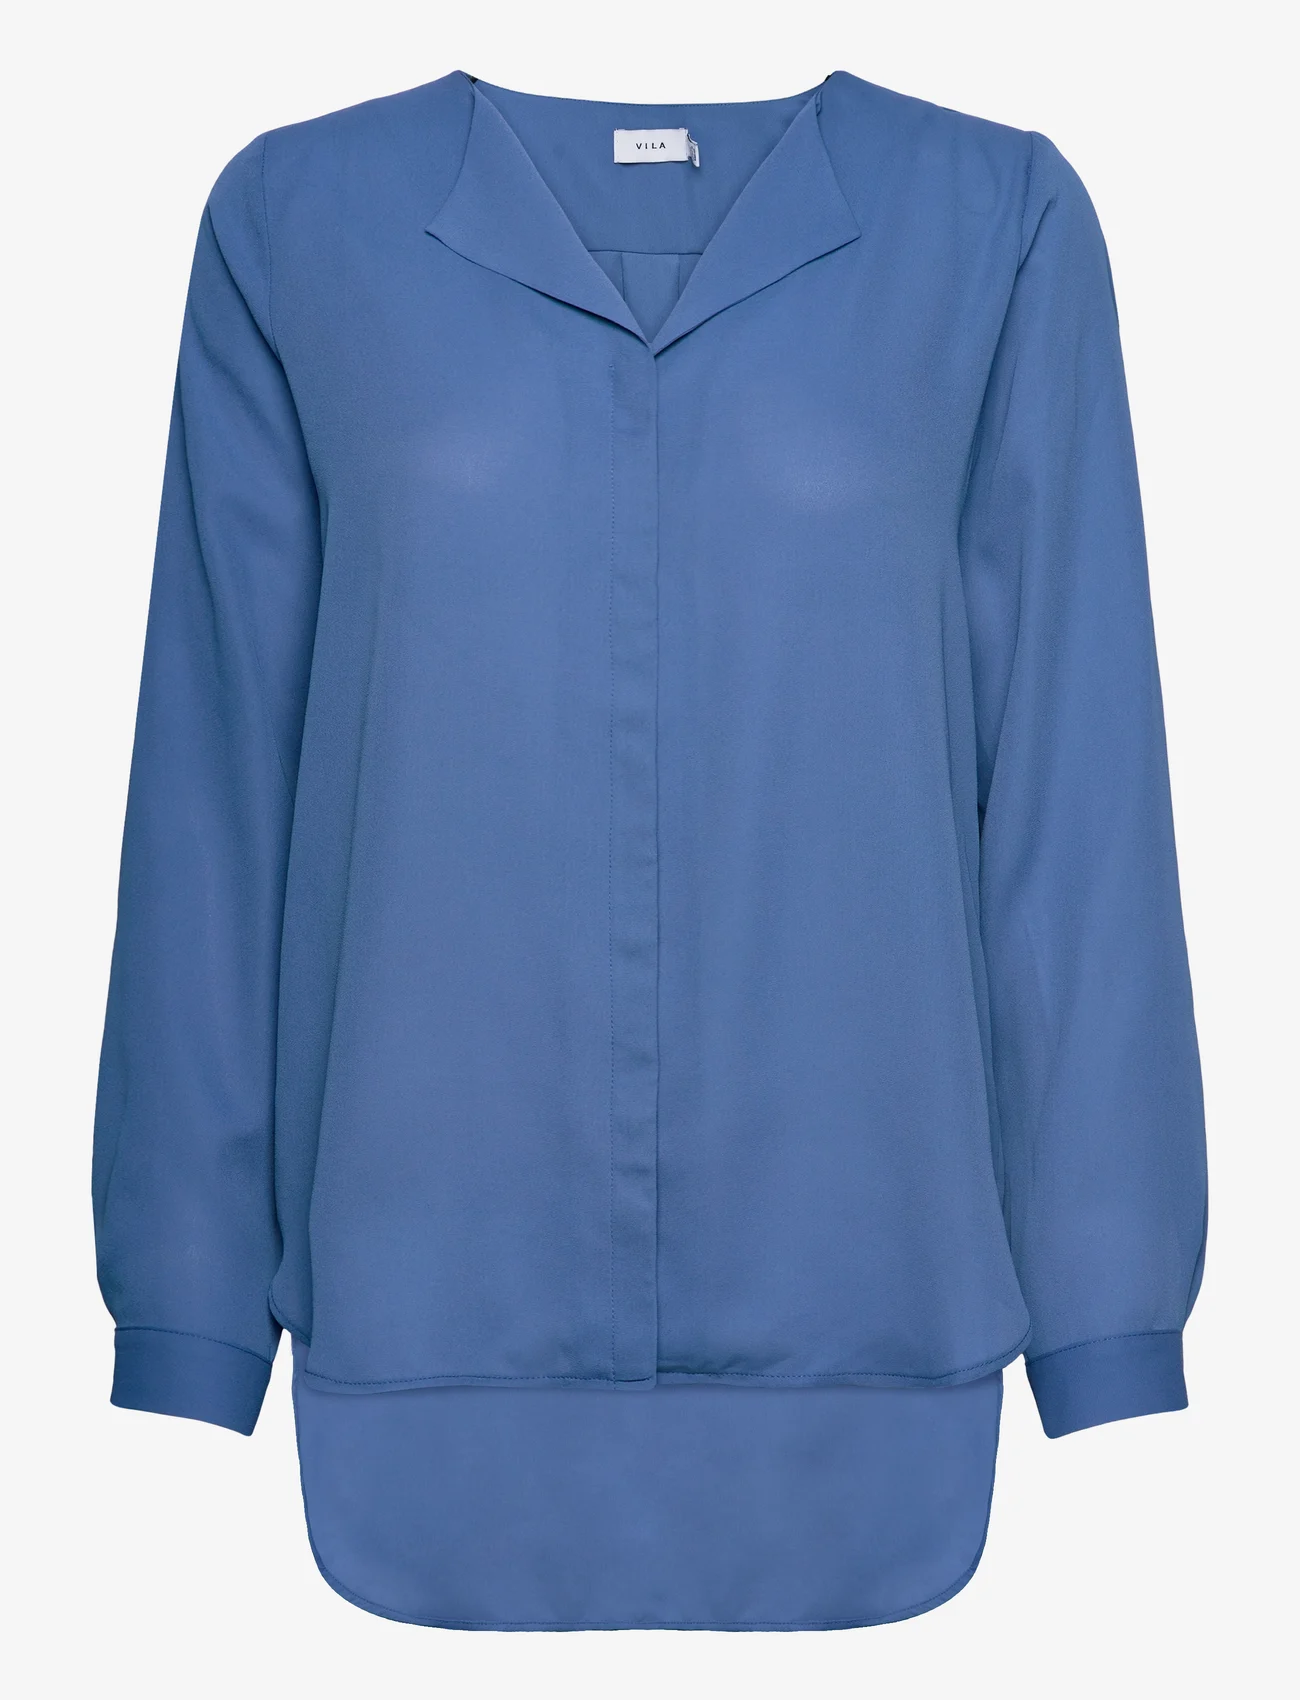 Vila - VILUCY L/S SHIRT - NOOS - long-sleeved blouses - federal blue - 0